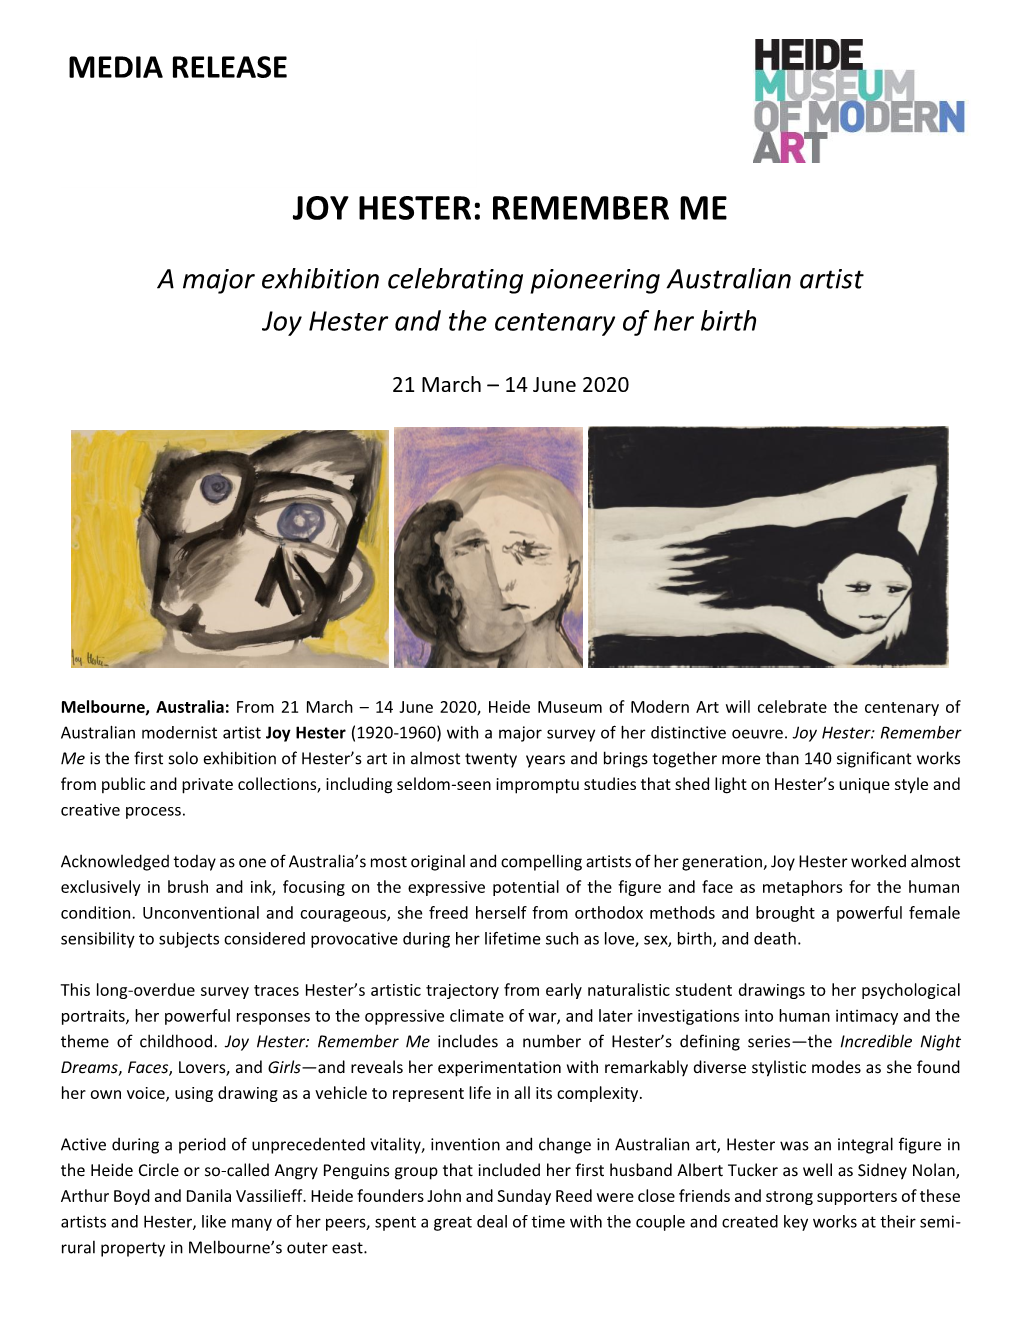 Joy Hester: Remember Me